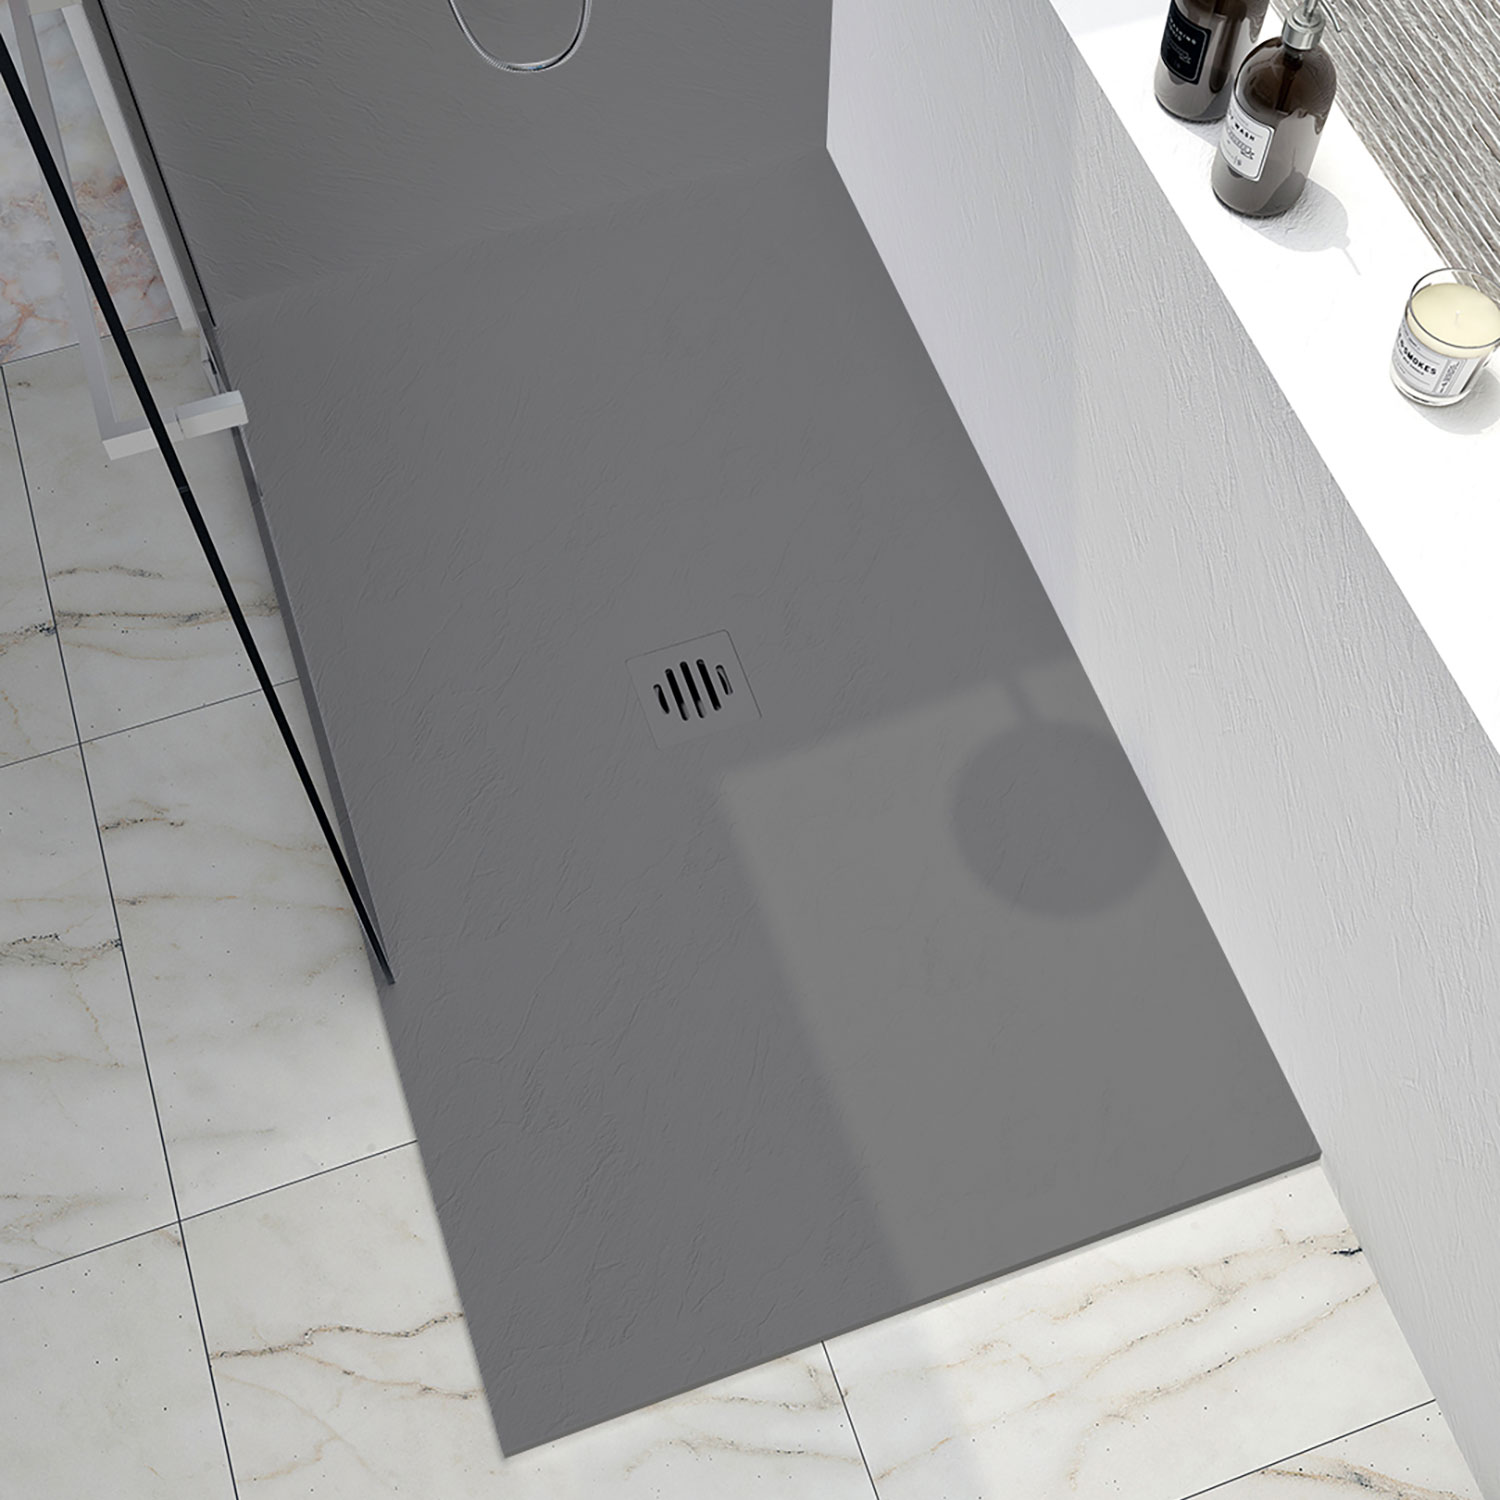 Shower base Slate 48 x 32, custom-made tile flange installation, in concrete grey